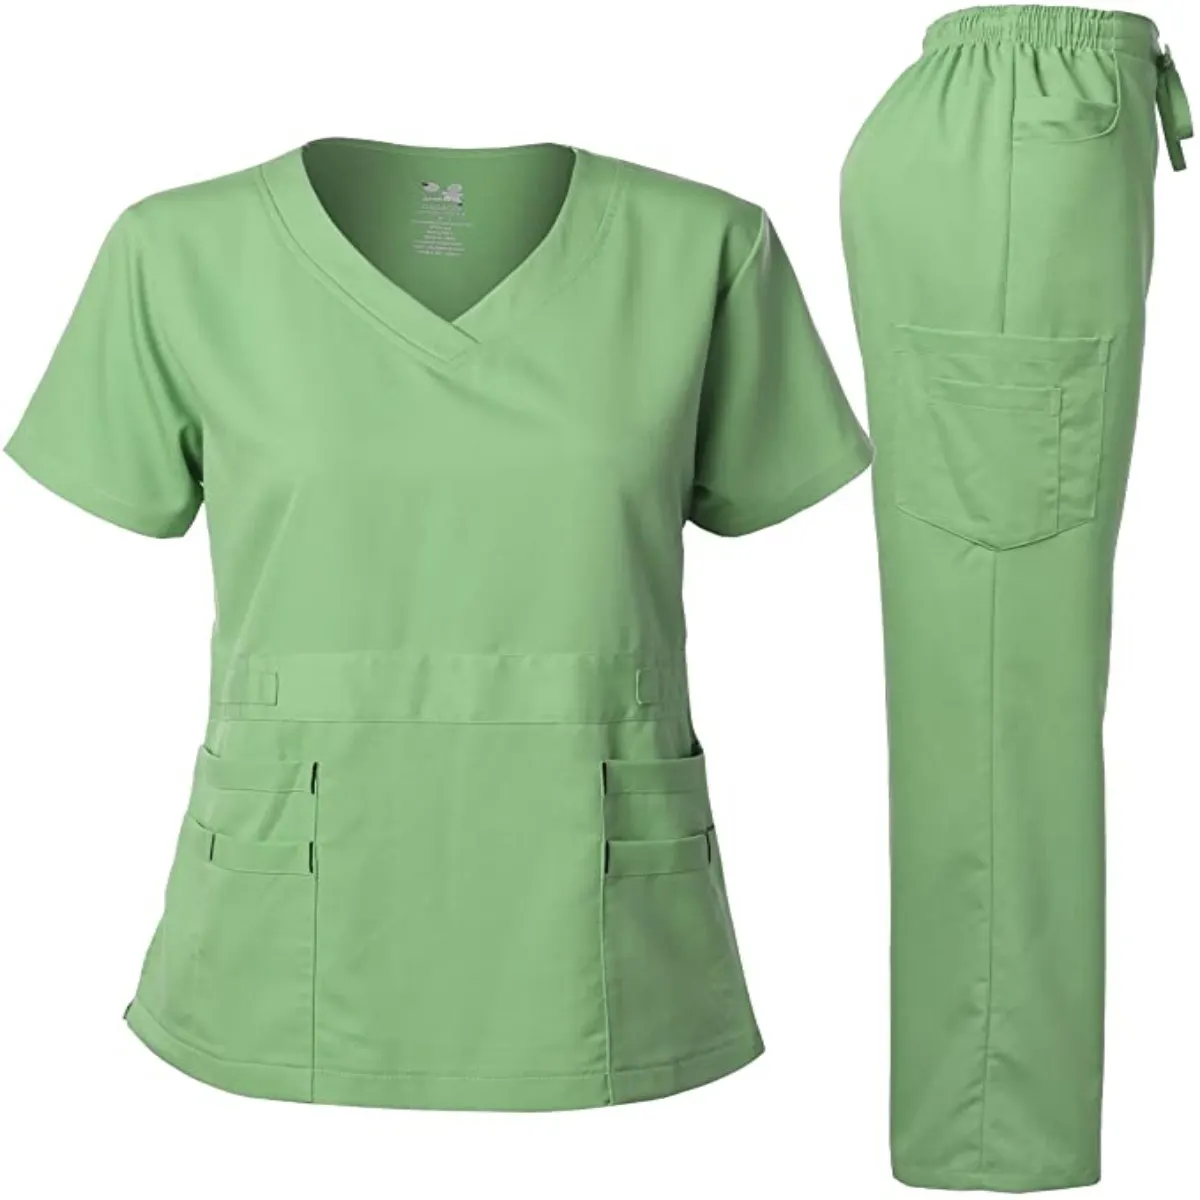 Muti Pockets Nurse Hospital Uniforms from Bangladesh